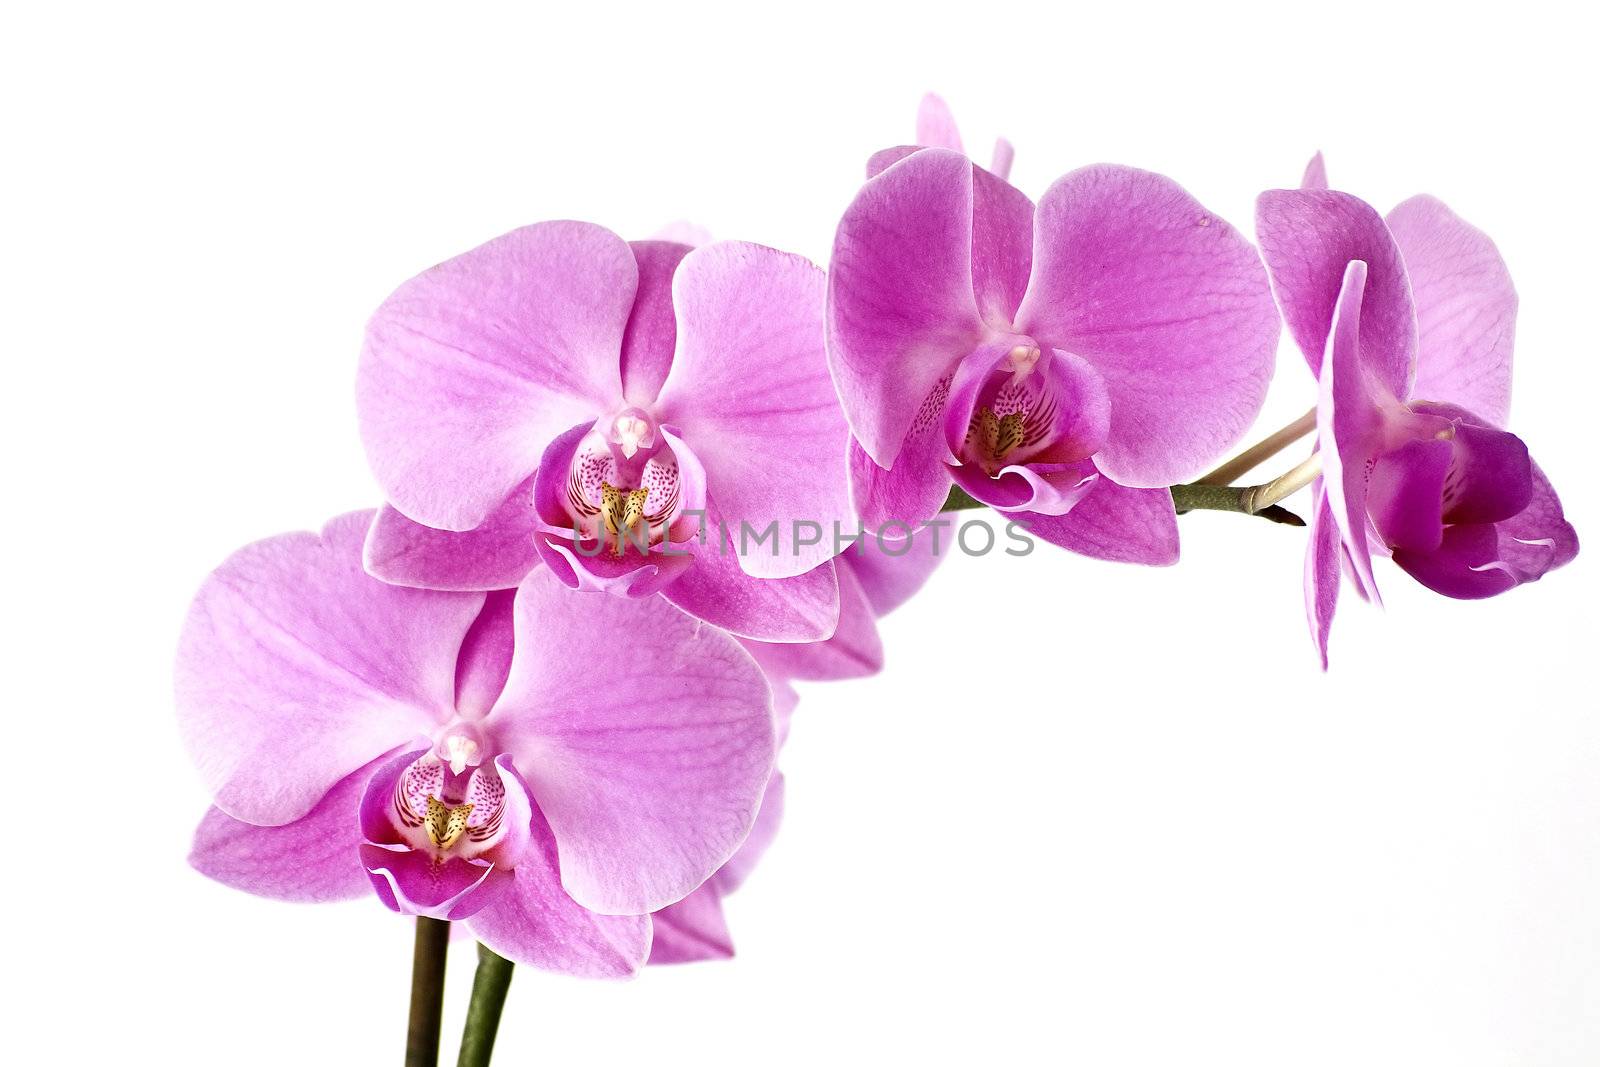 Orchid by miradrozdowski